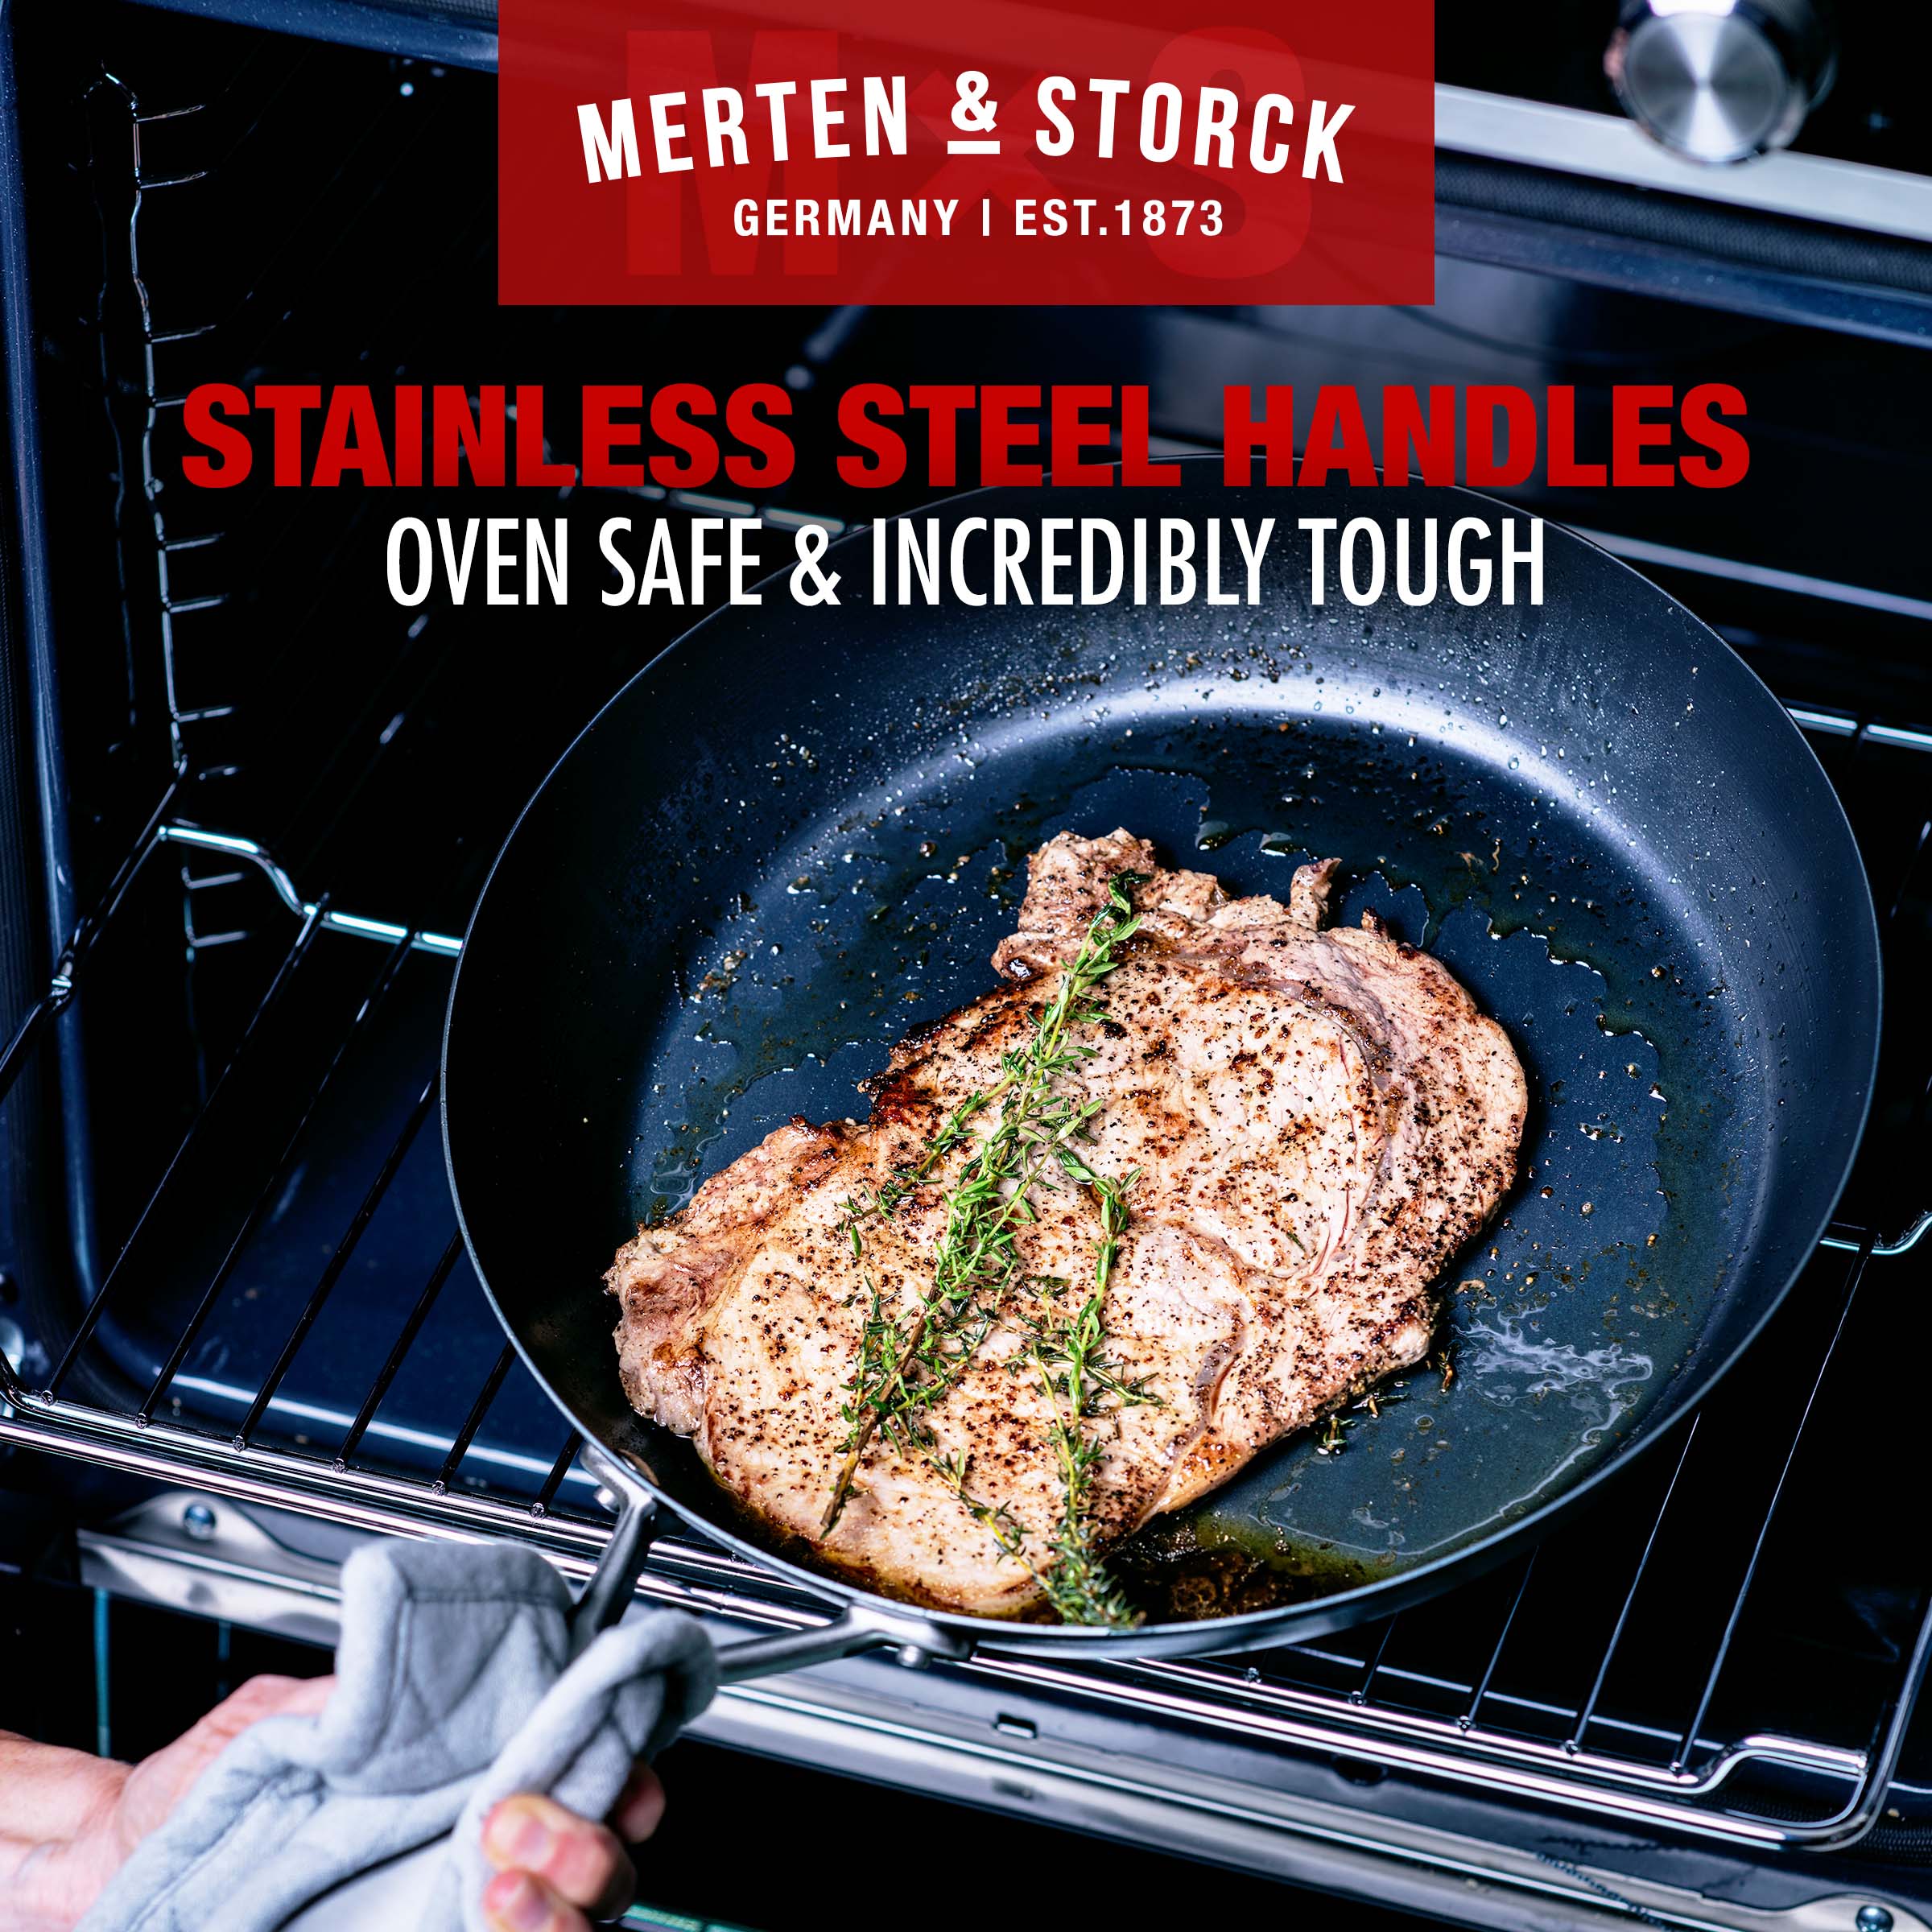 Merten & Storck Pre-Seasoned Carbon Steel Pro Induction 10" Frying Pan Skillet, Black - image 5 of 7